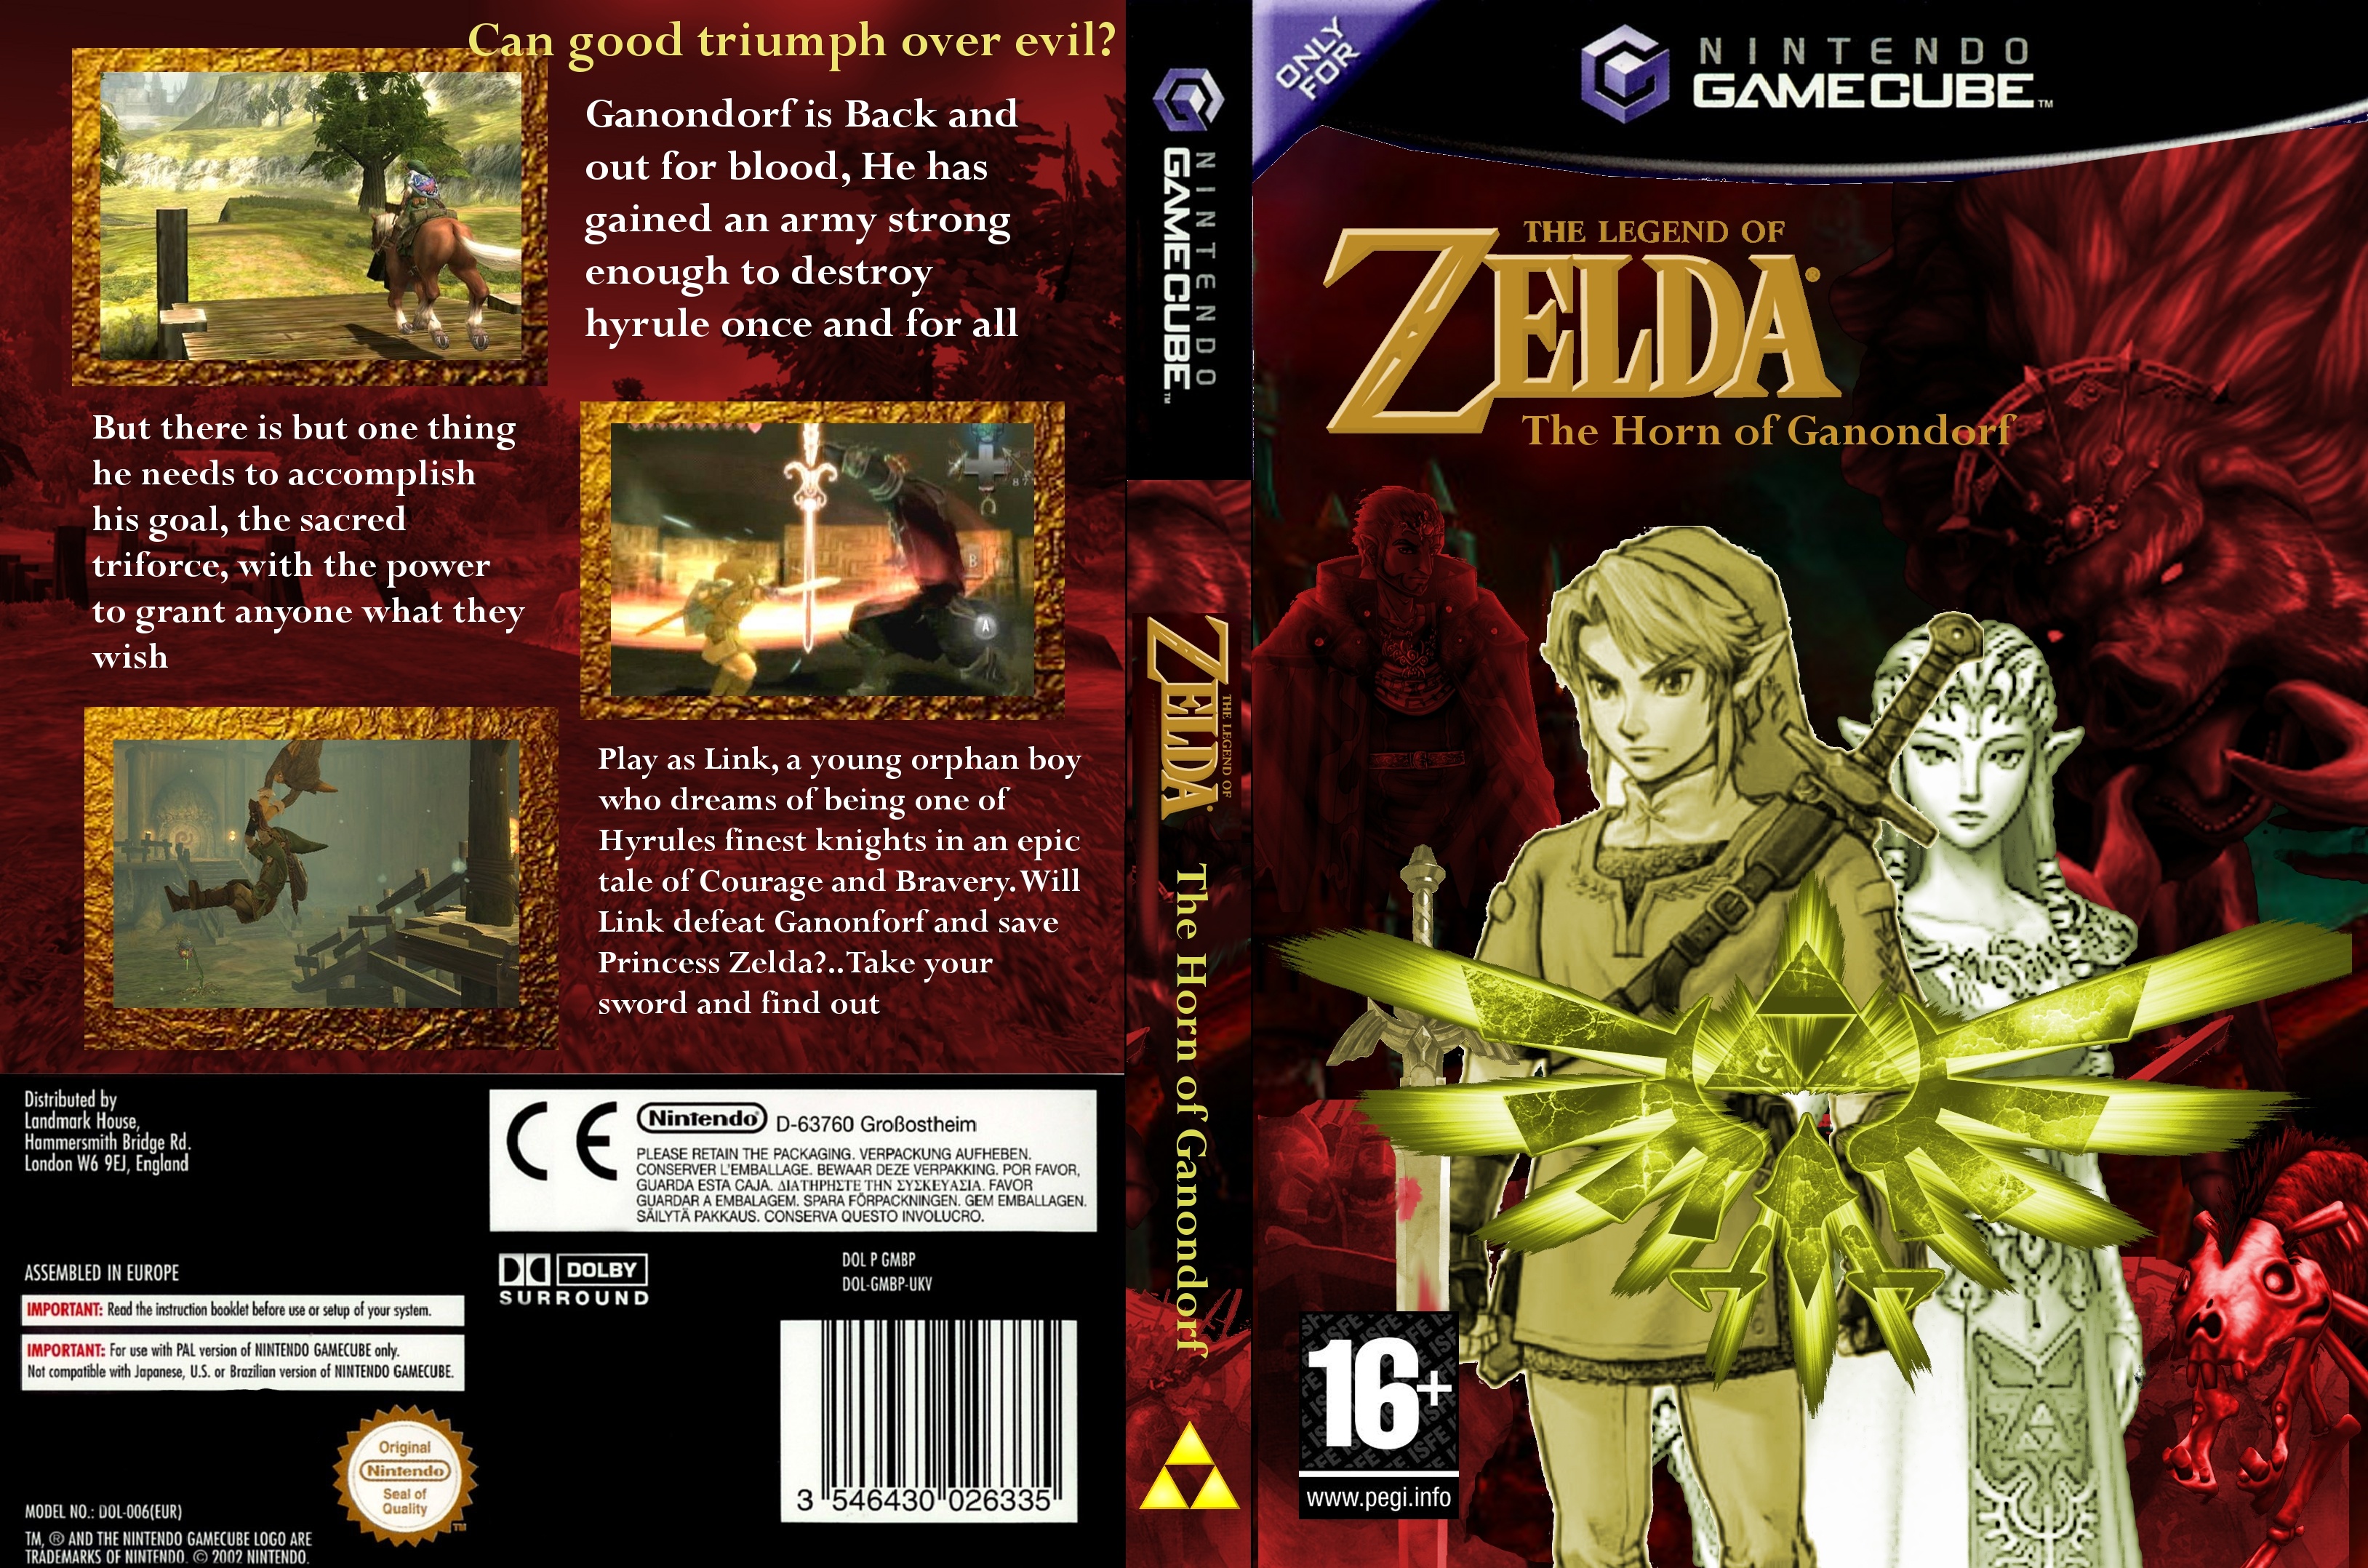 Zelda: The Horn of Ganondorf box cover